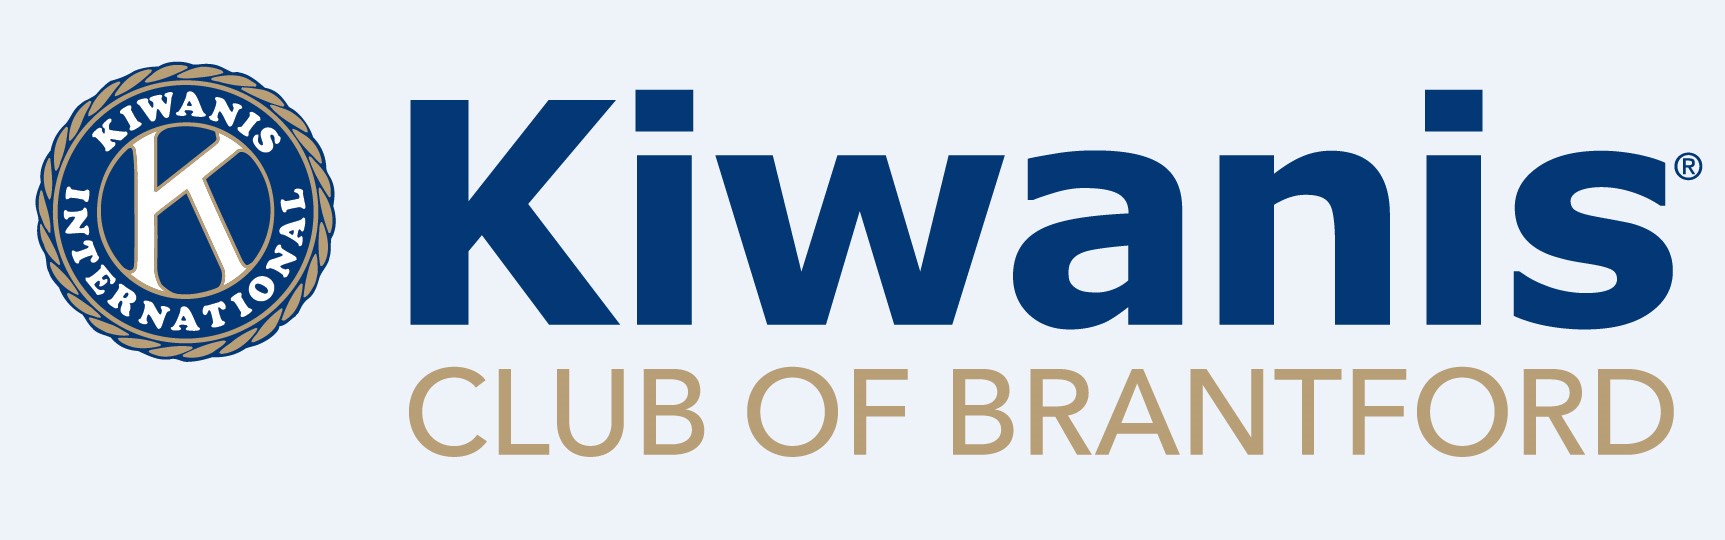 Kiwanis Club Brantford Logo